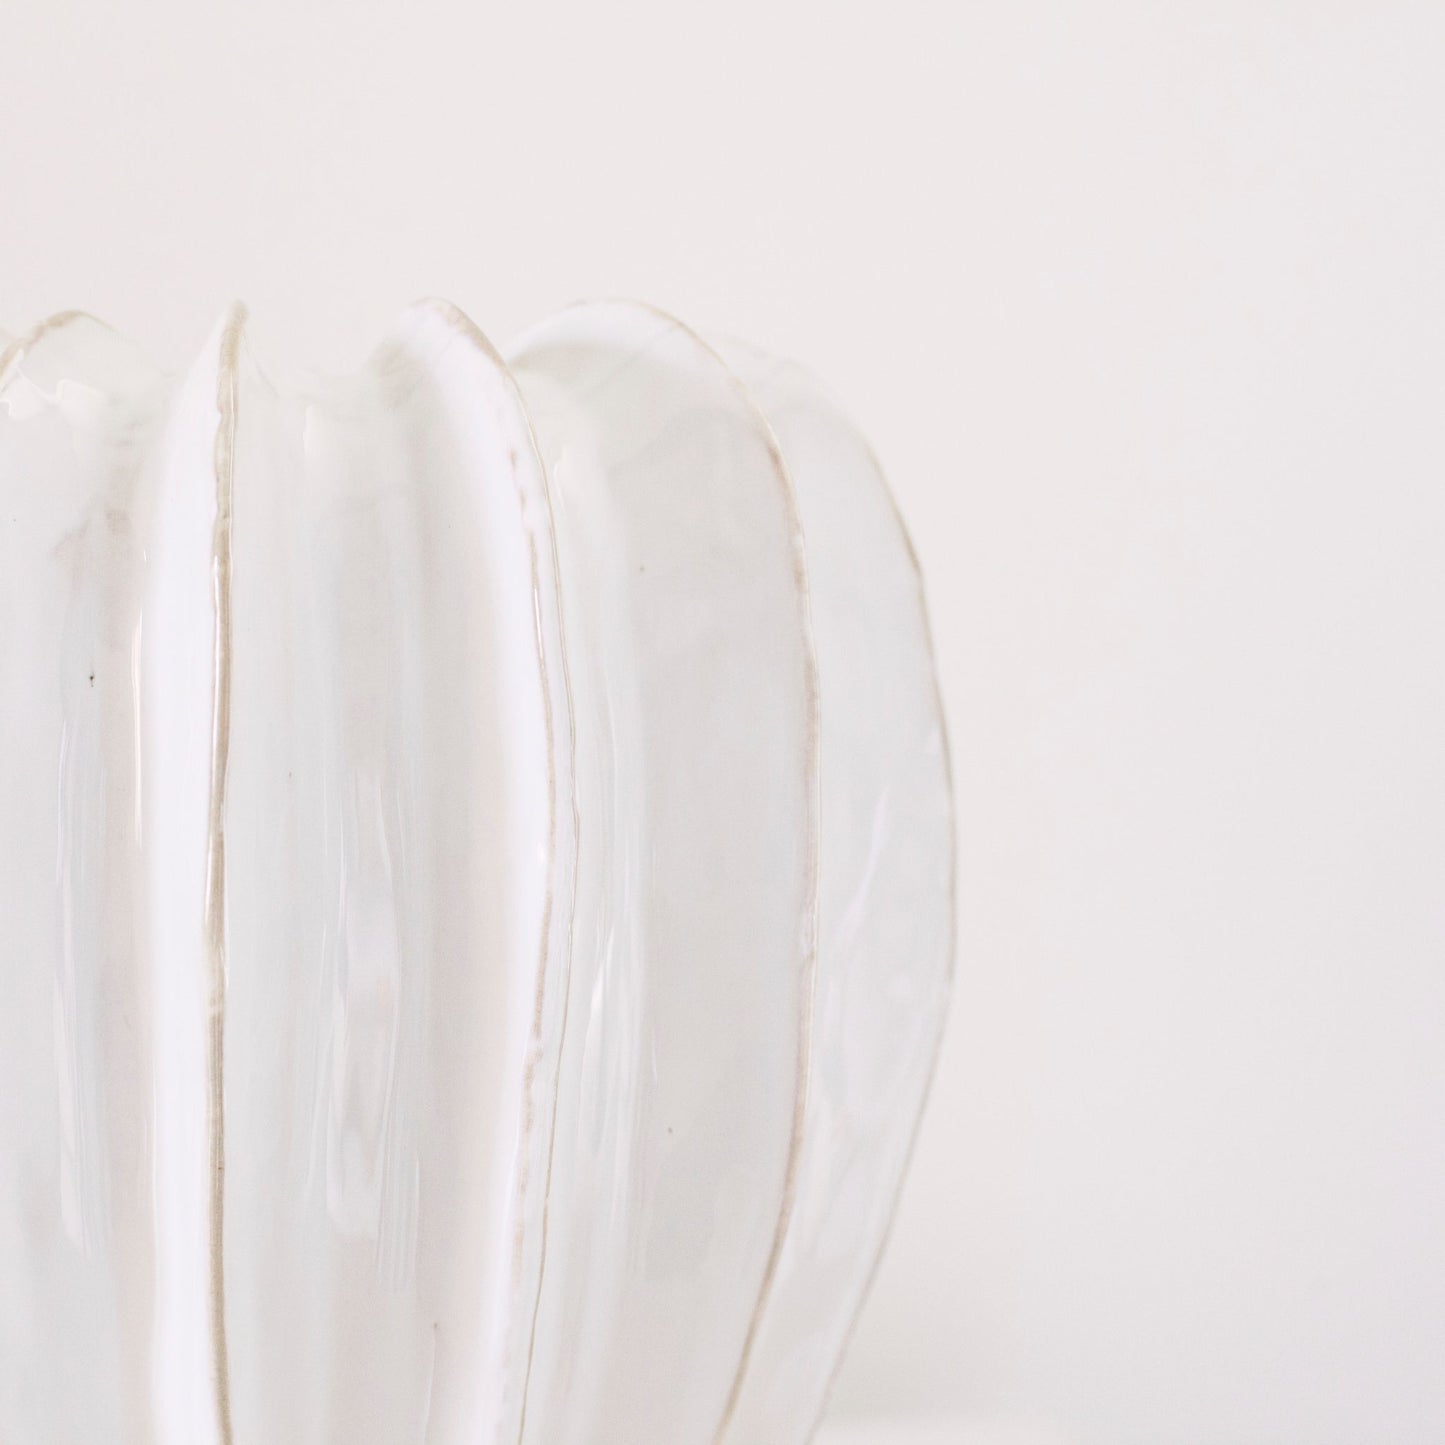 Lille White Ceramic Vase